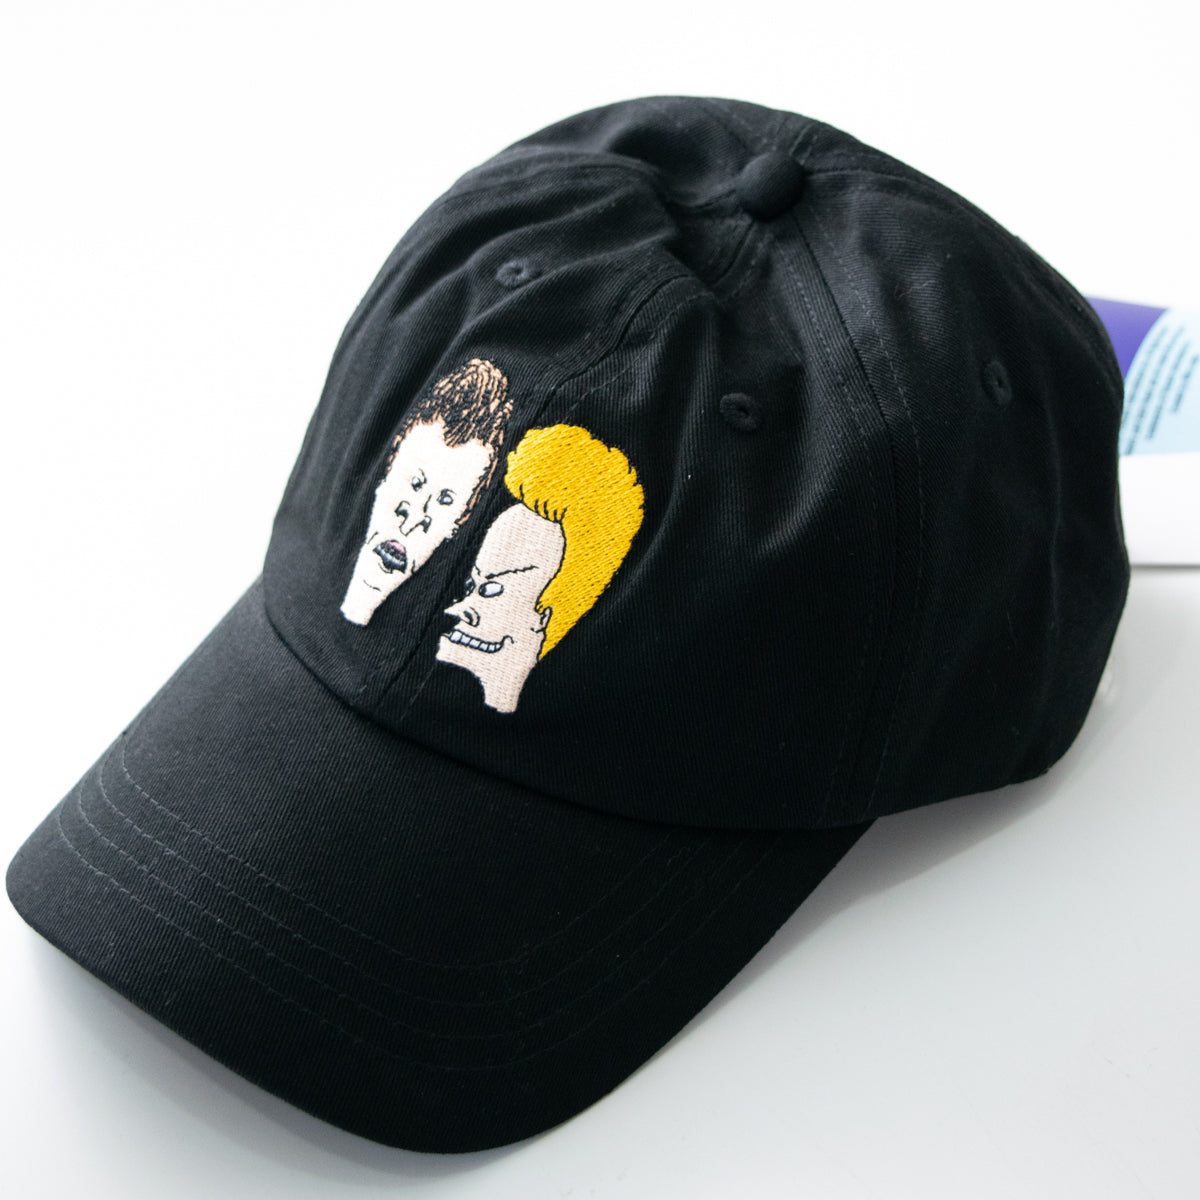 Beavis and Butt-Head embroidery cap Black